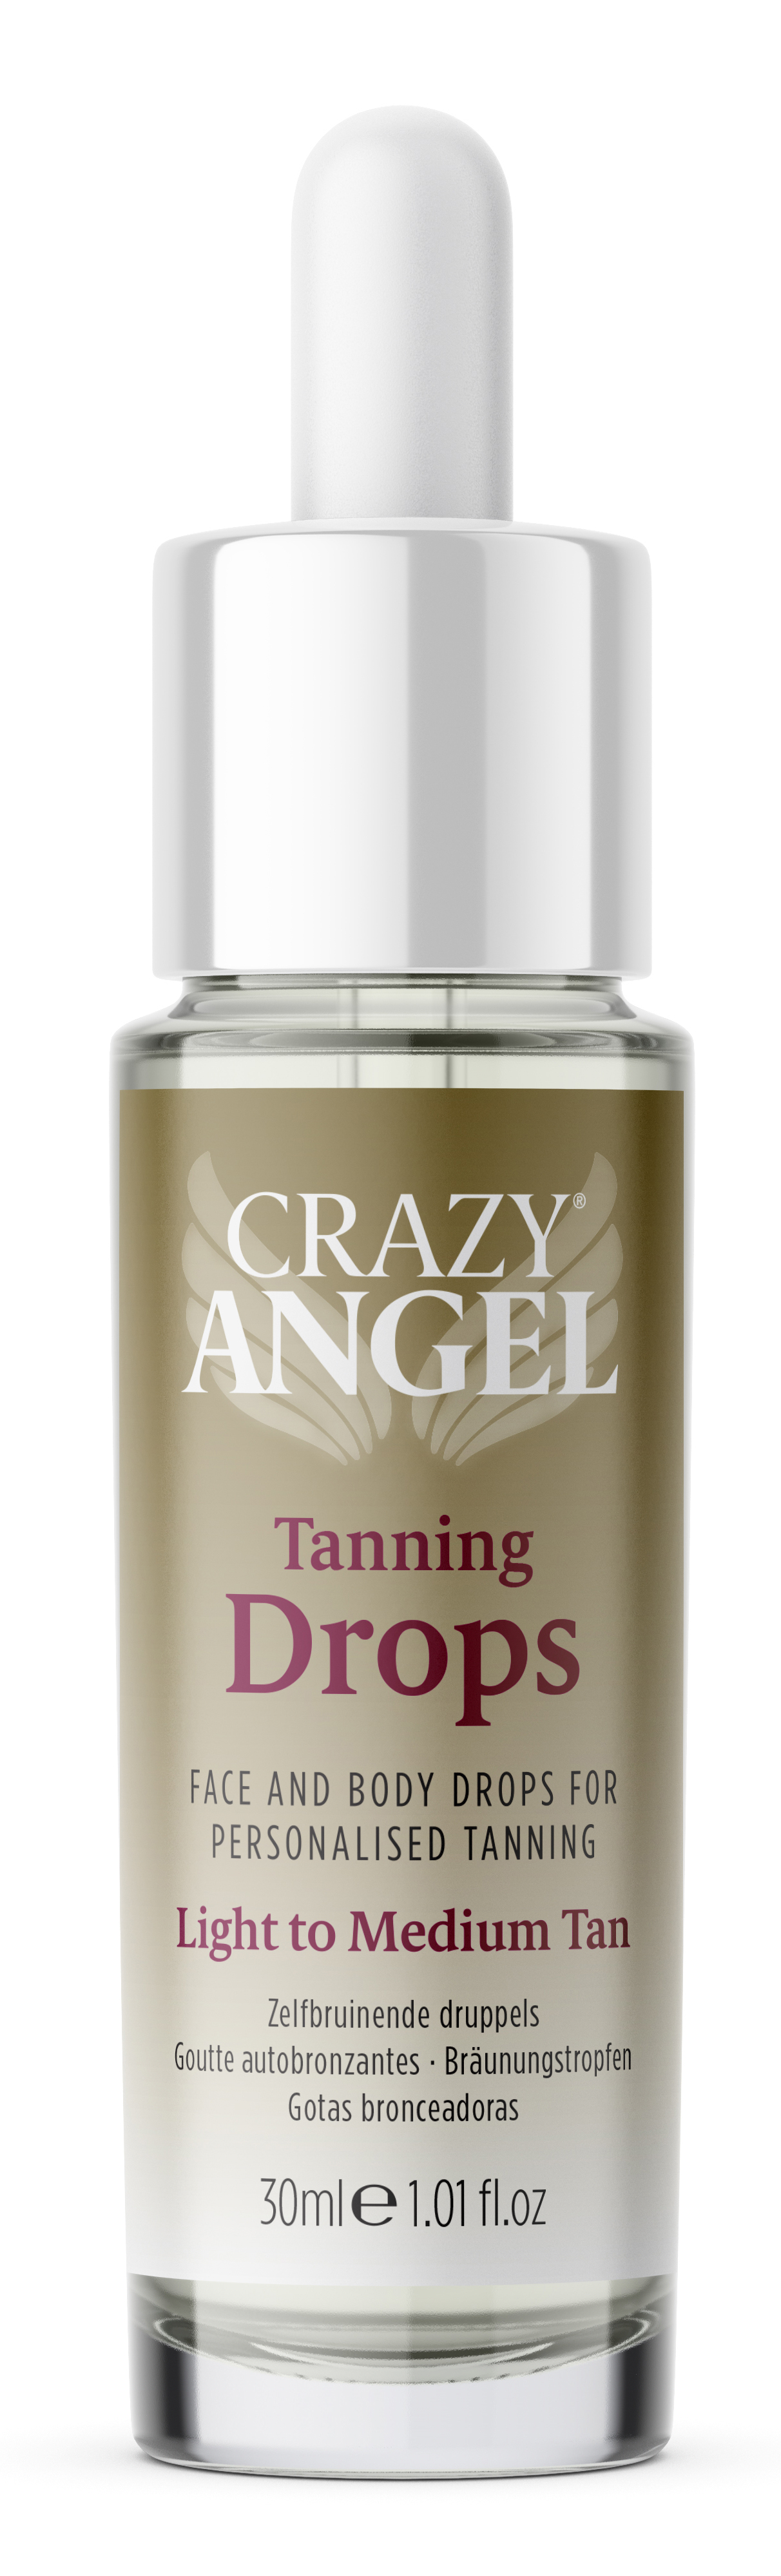 Crazy Angel Tanning Drops